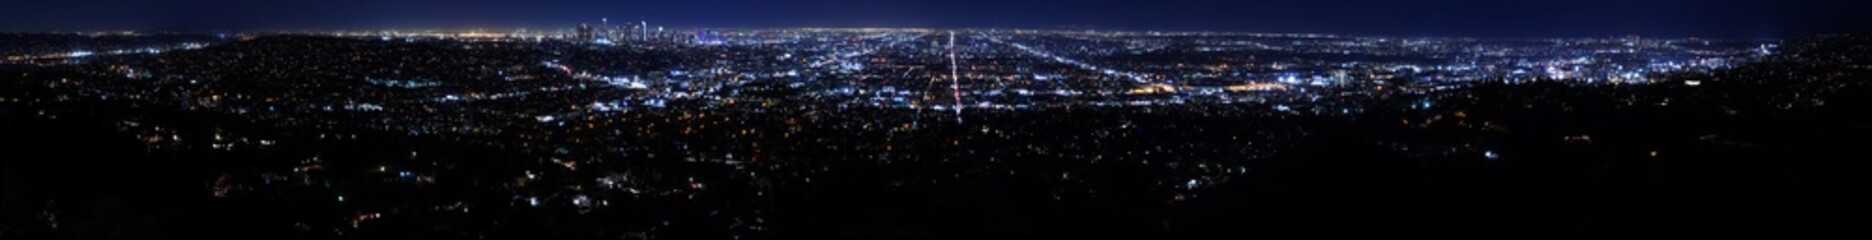 Los Angeles Skyline in HiRes Widescreen